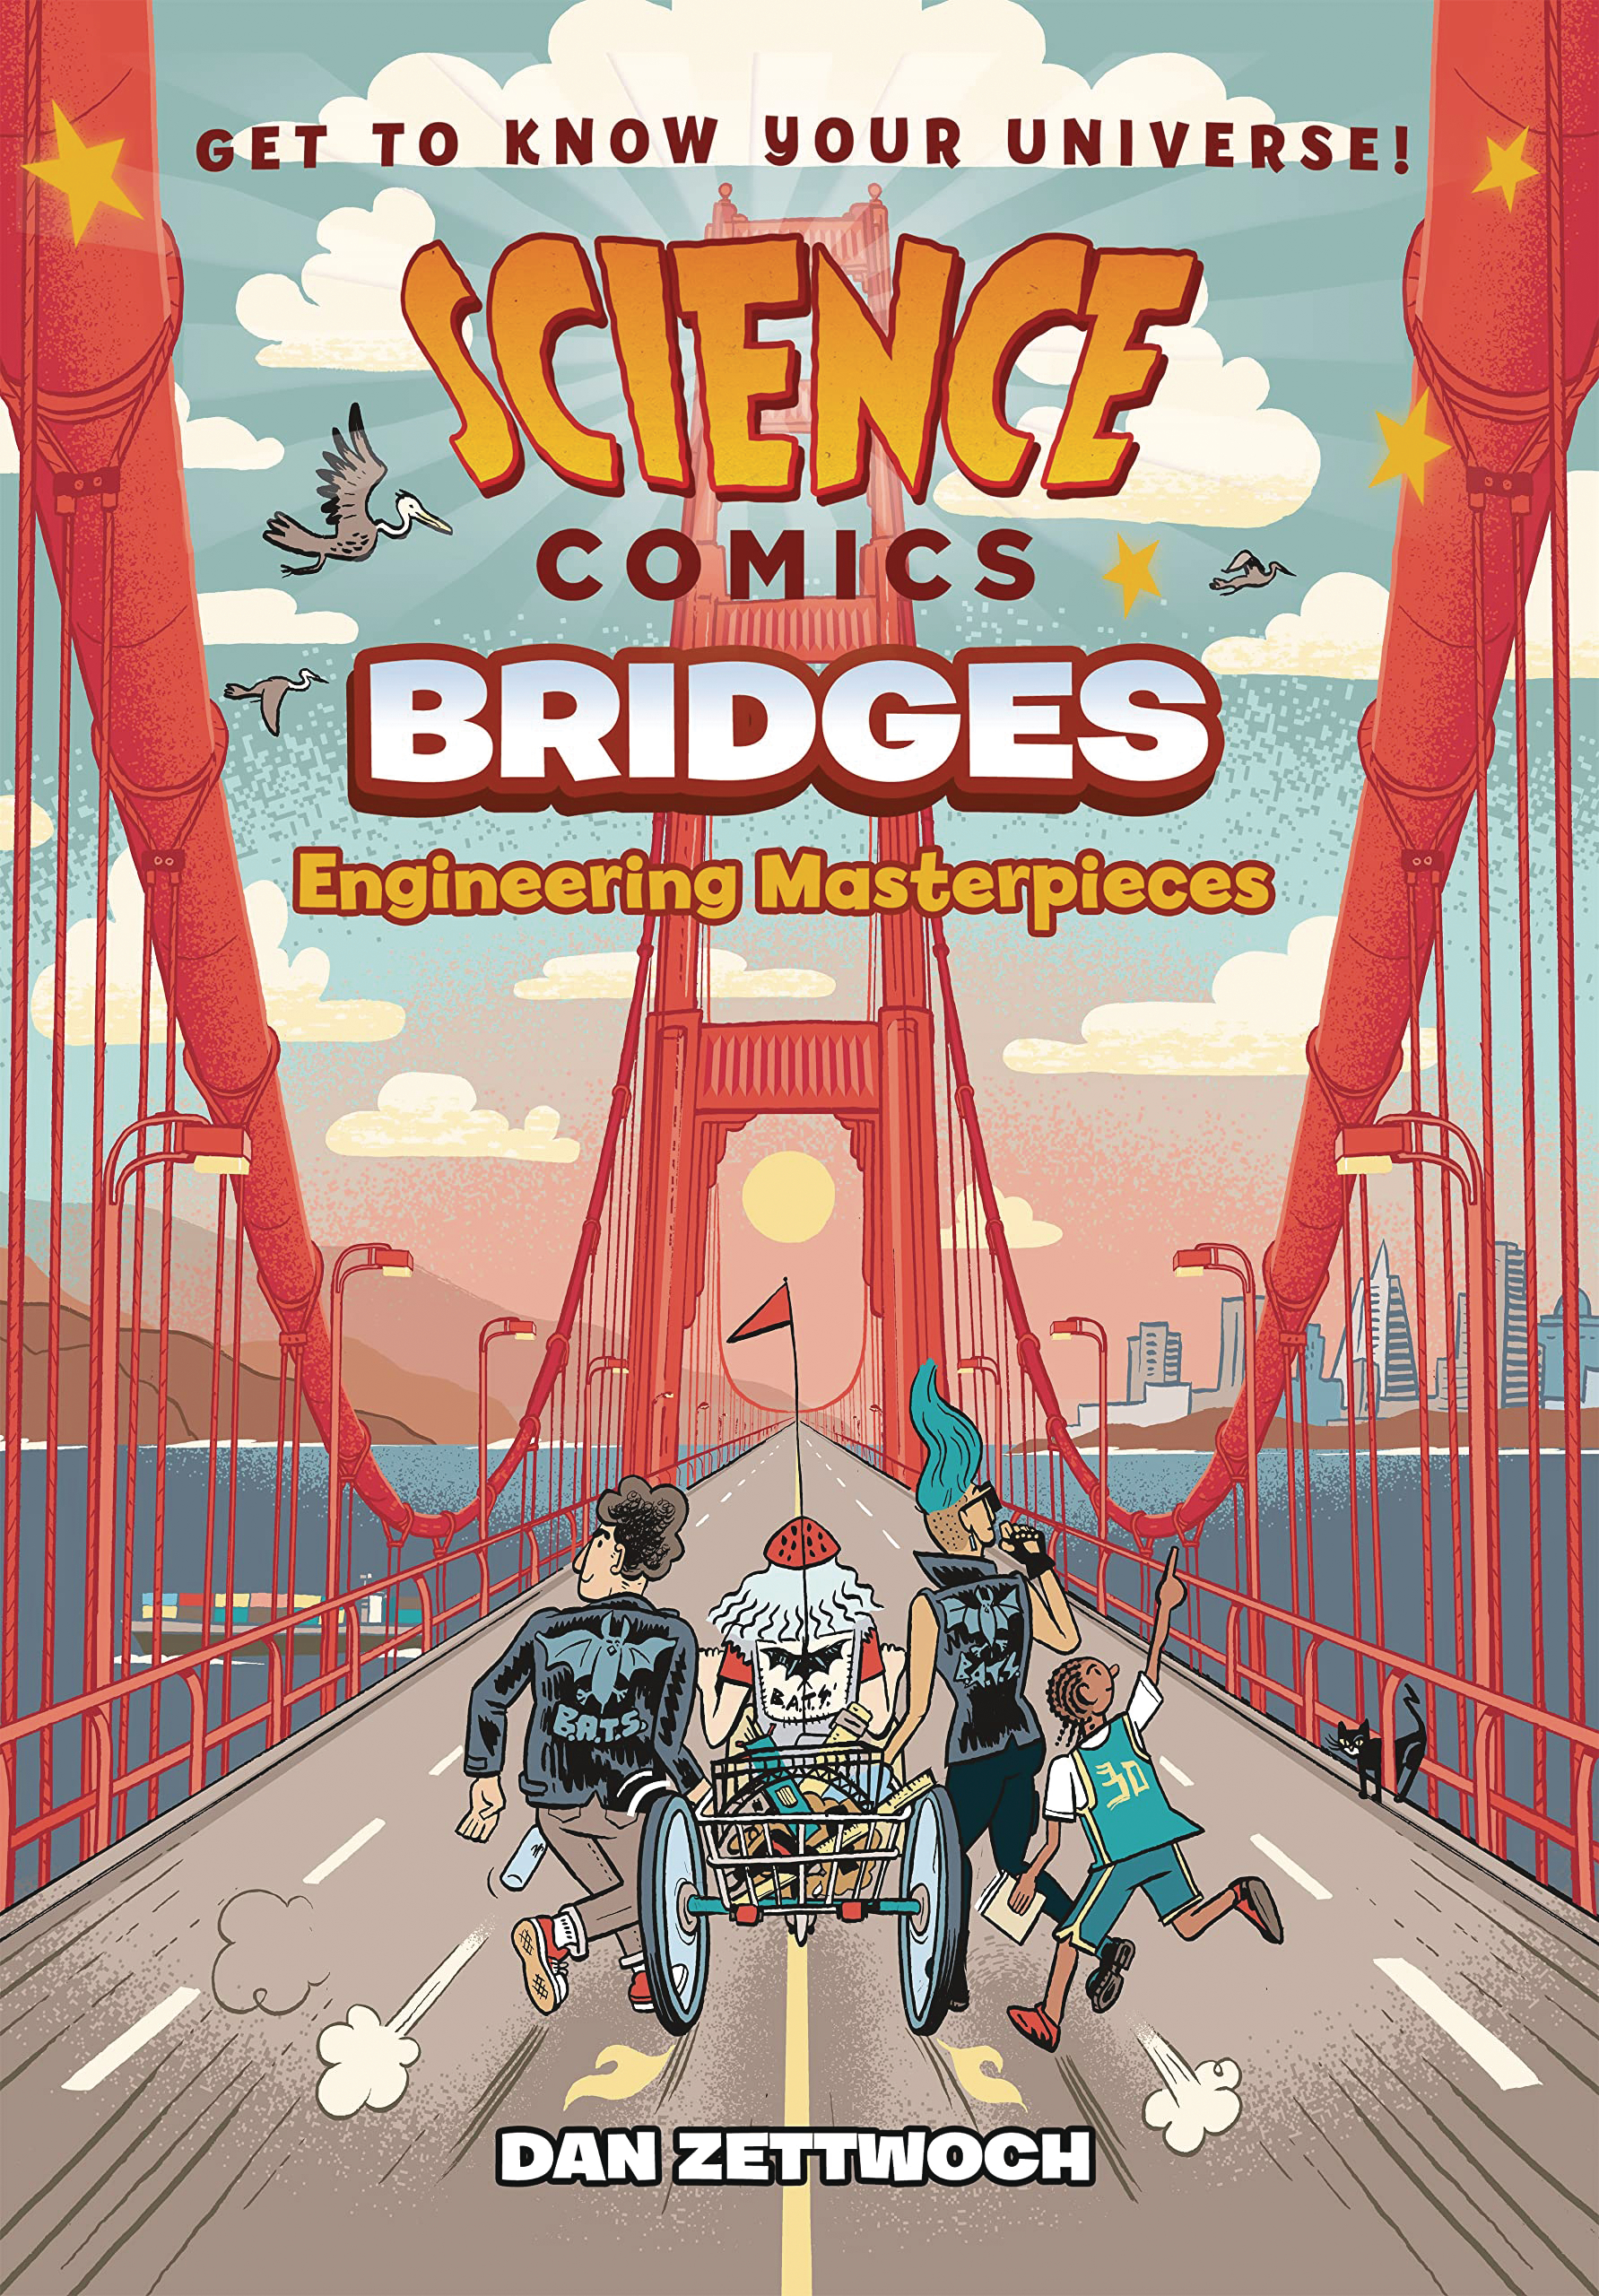 Science Comics Bridges Soft Cover Graphic Novel